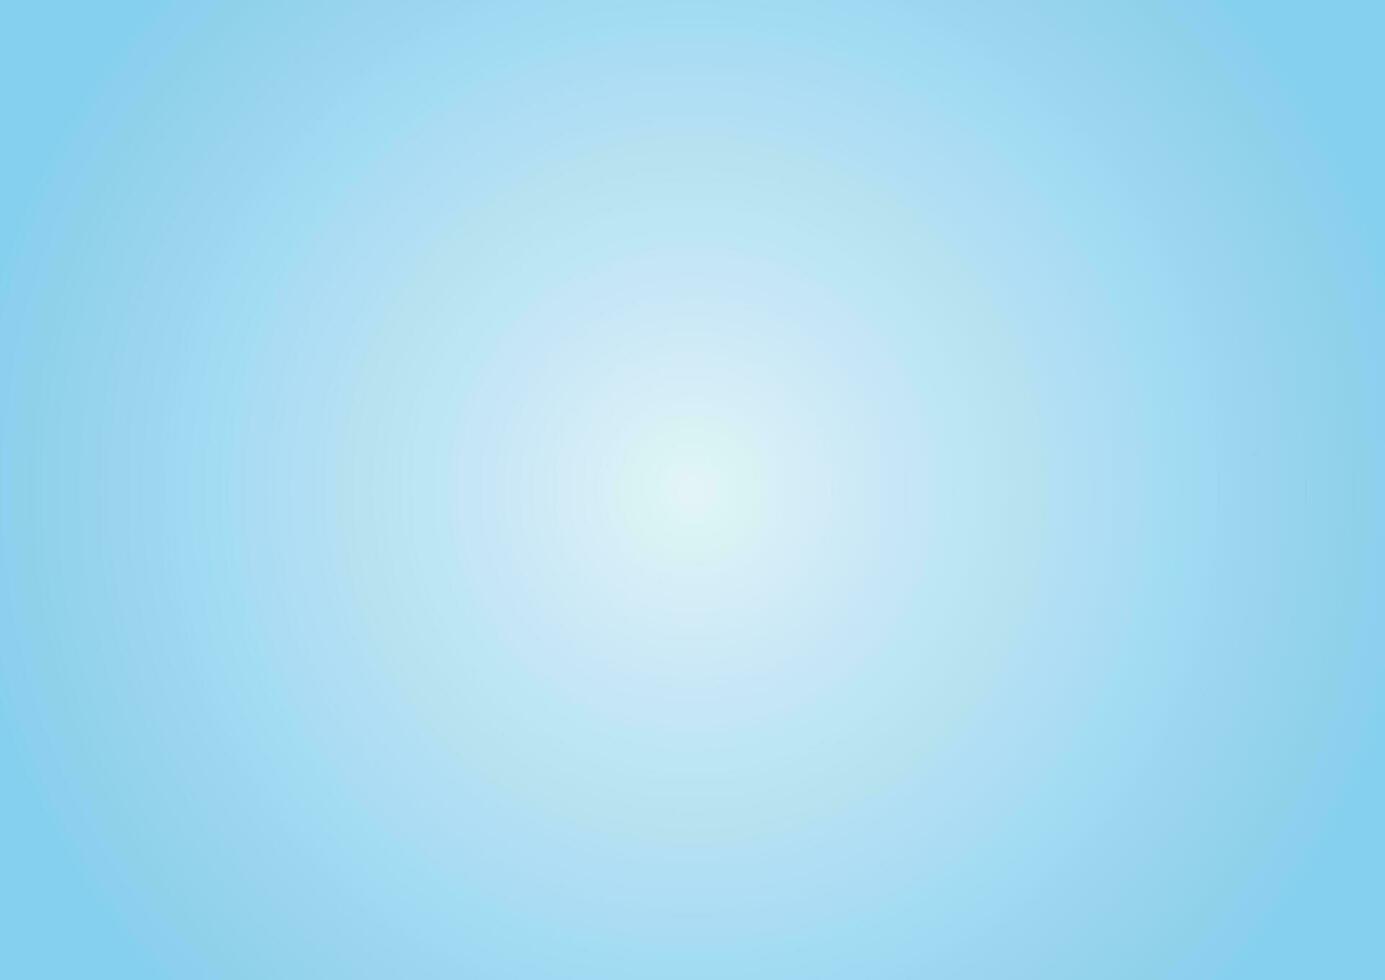 Sky blue light gradient background. Vector illustration. EPS 10